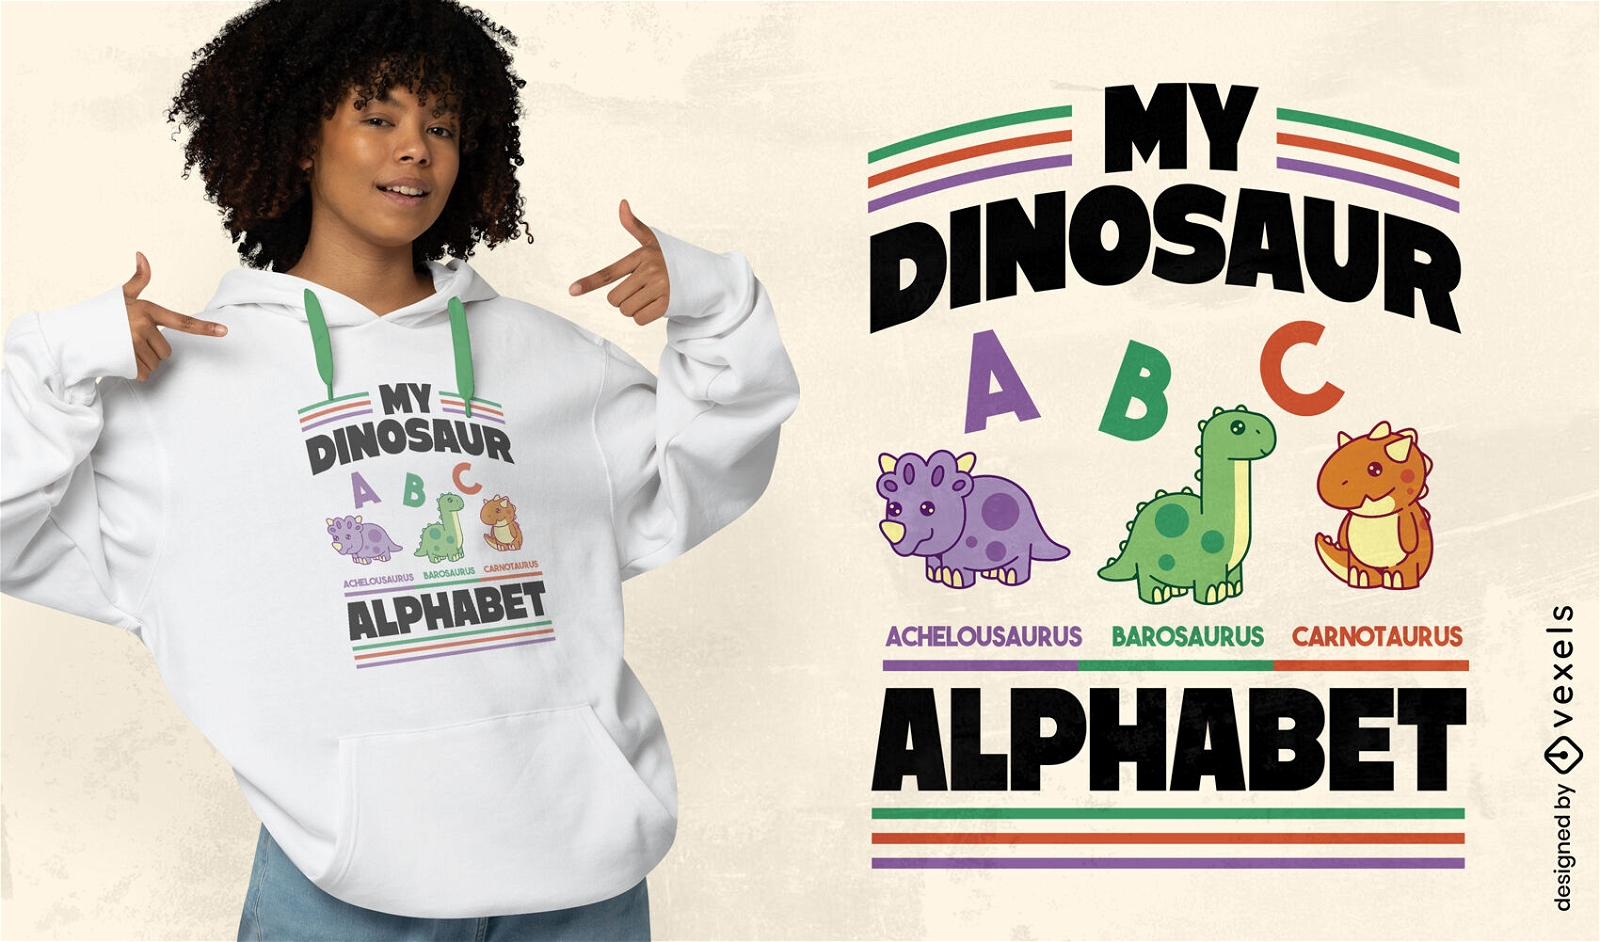 Dinosaur abc alphabet t-shirt design